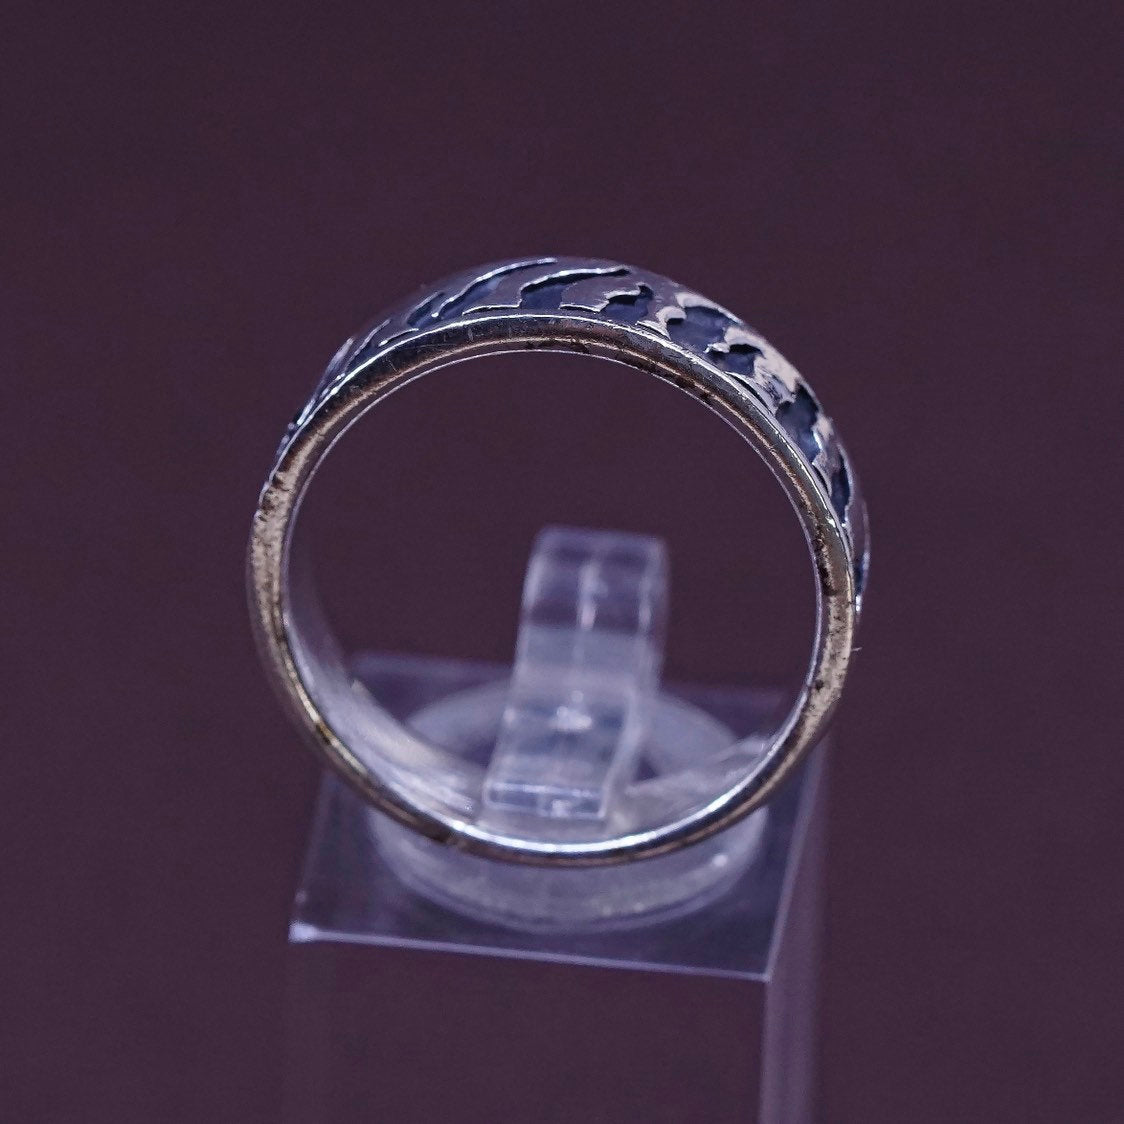 sz 11, vtg Sterling silver handmade ring, 925 band w/ fire embossed